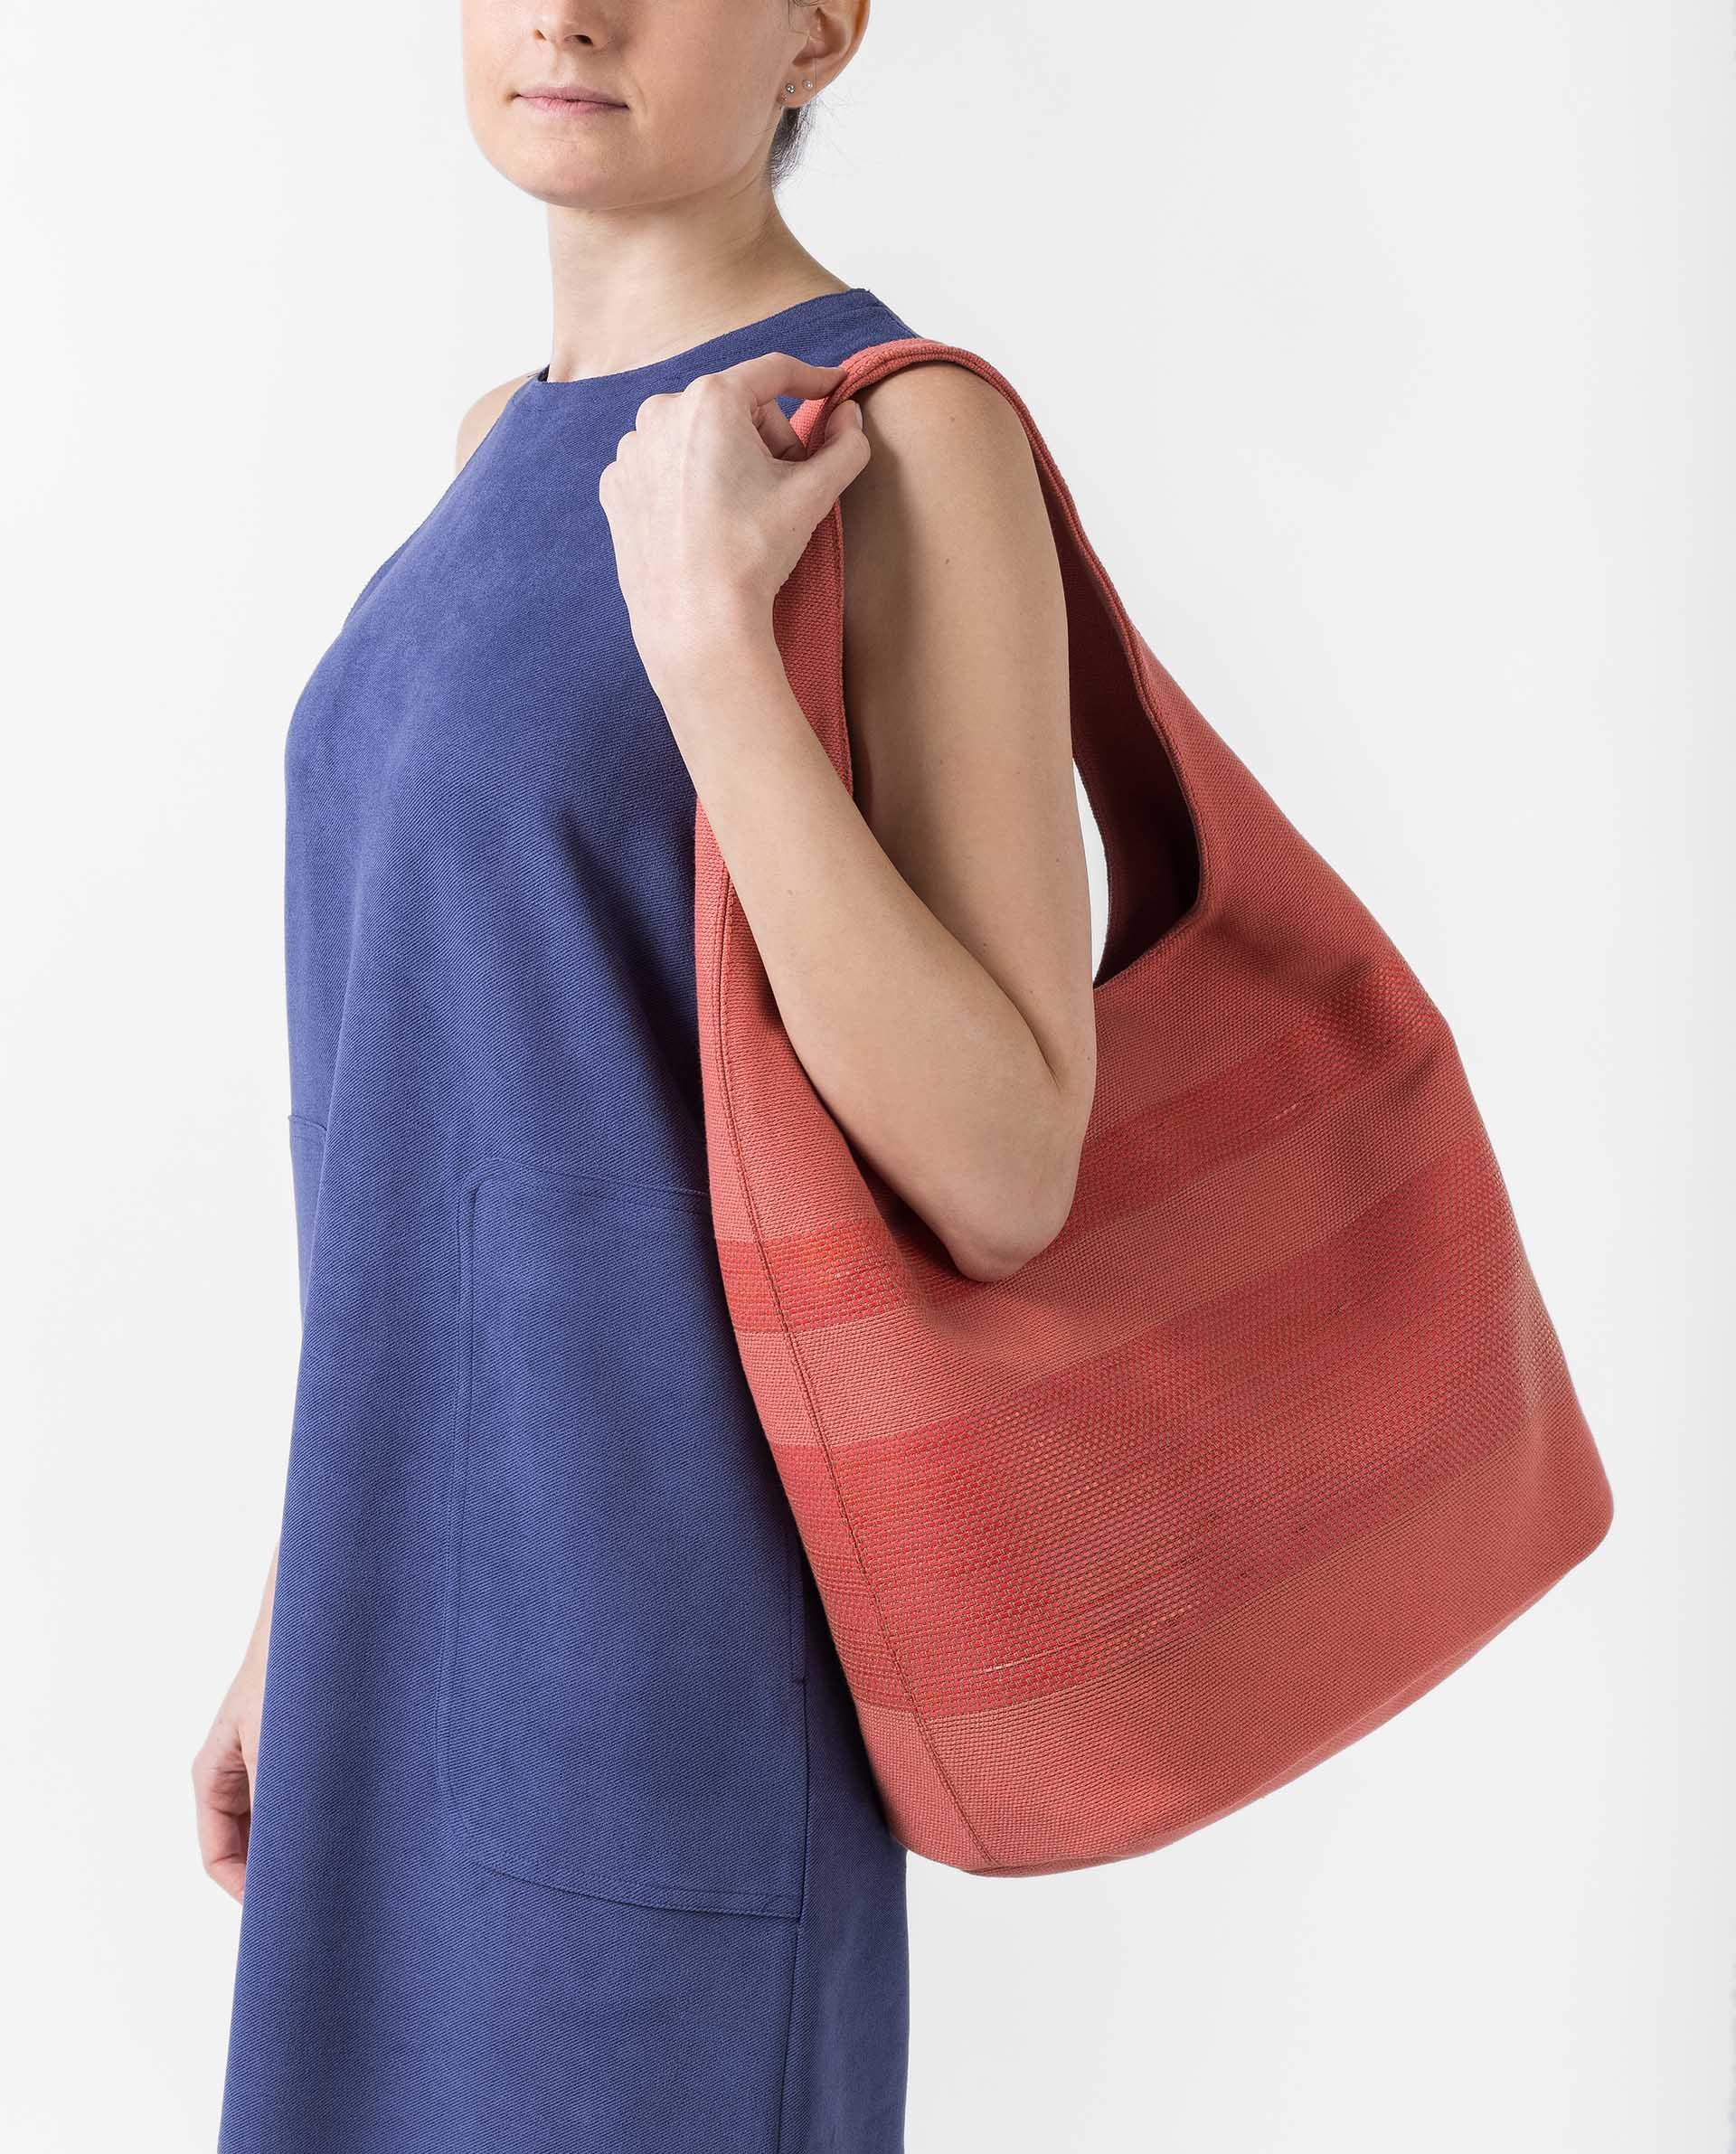 UNISA Hobo bag in assorted colours ZISLOTE_21_SIA 2